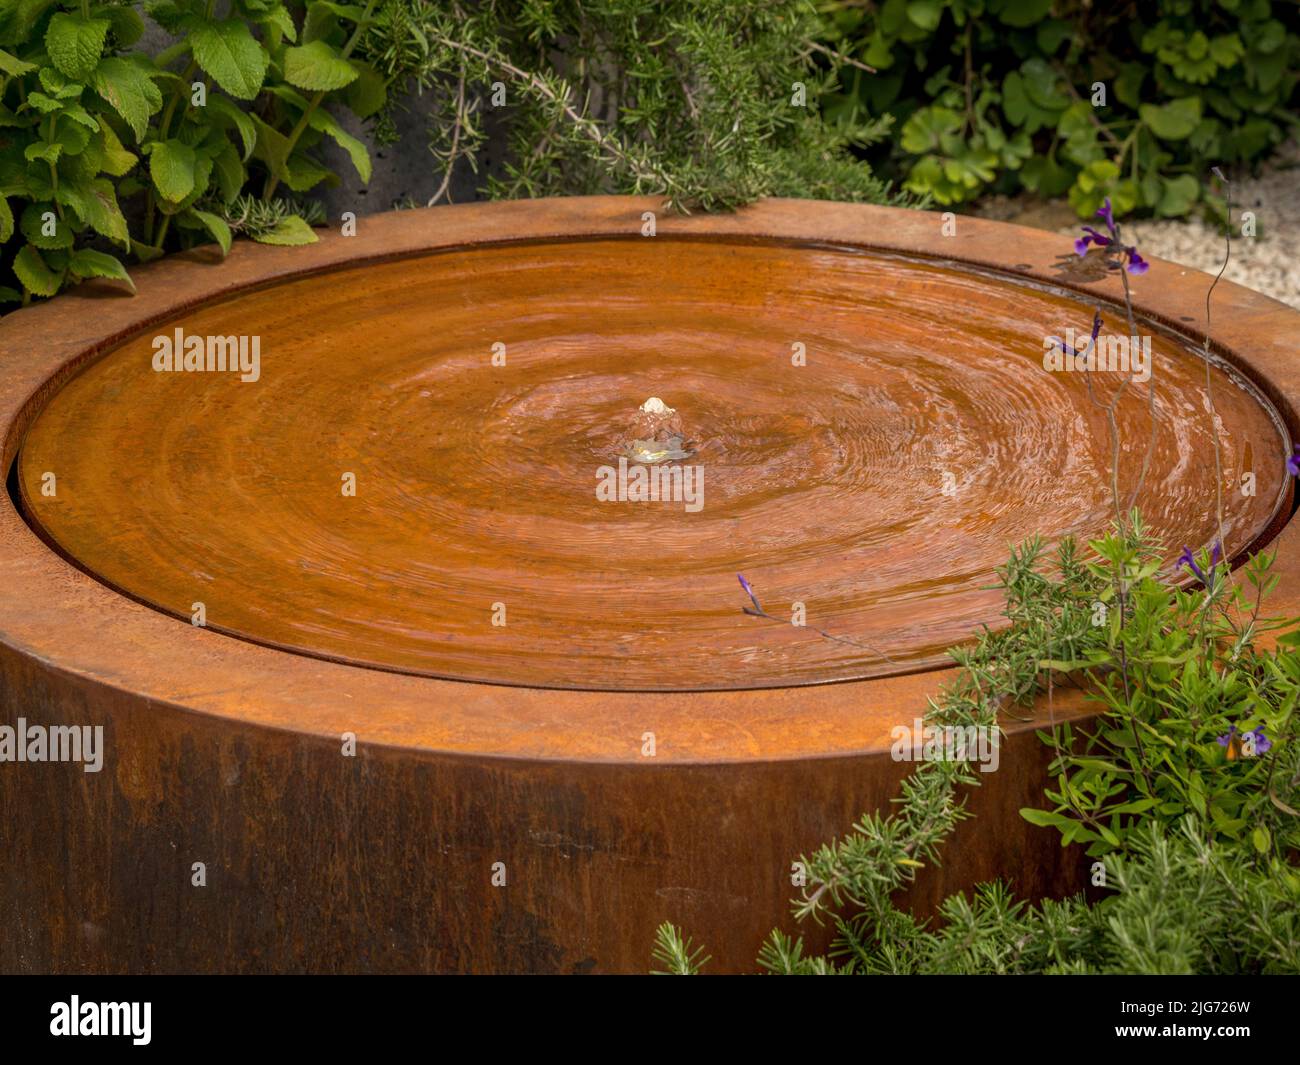 Circular flat Corten steel water feature in a UK garden. Stock Photo